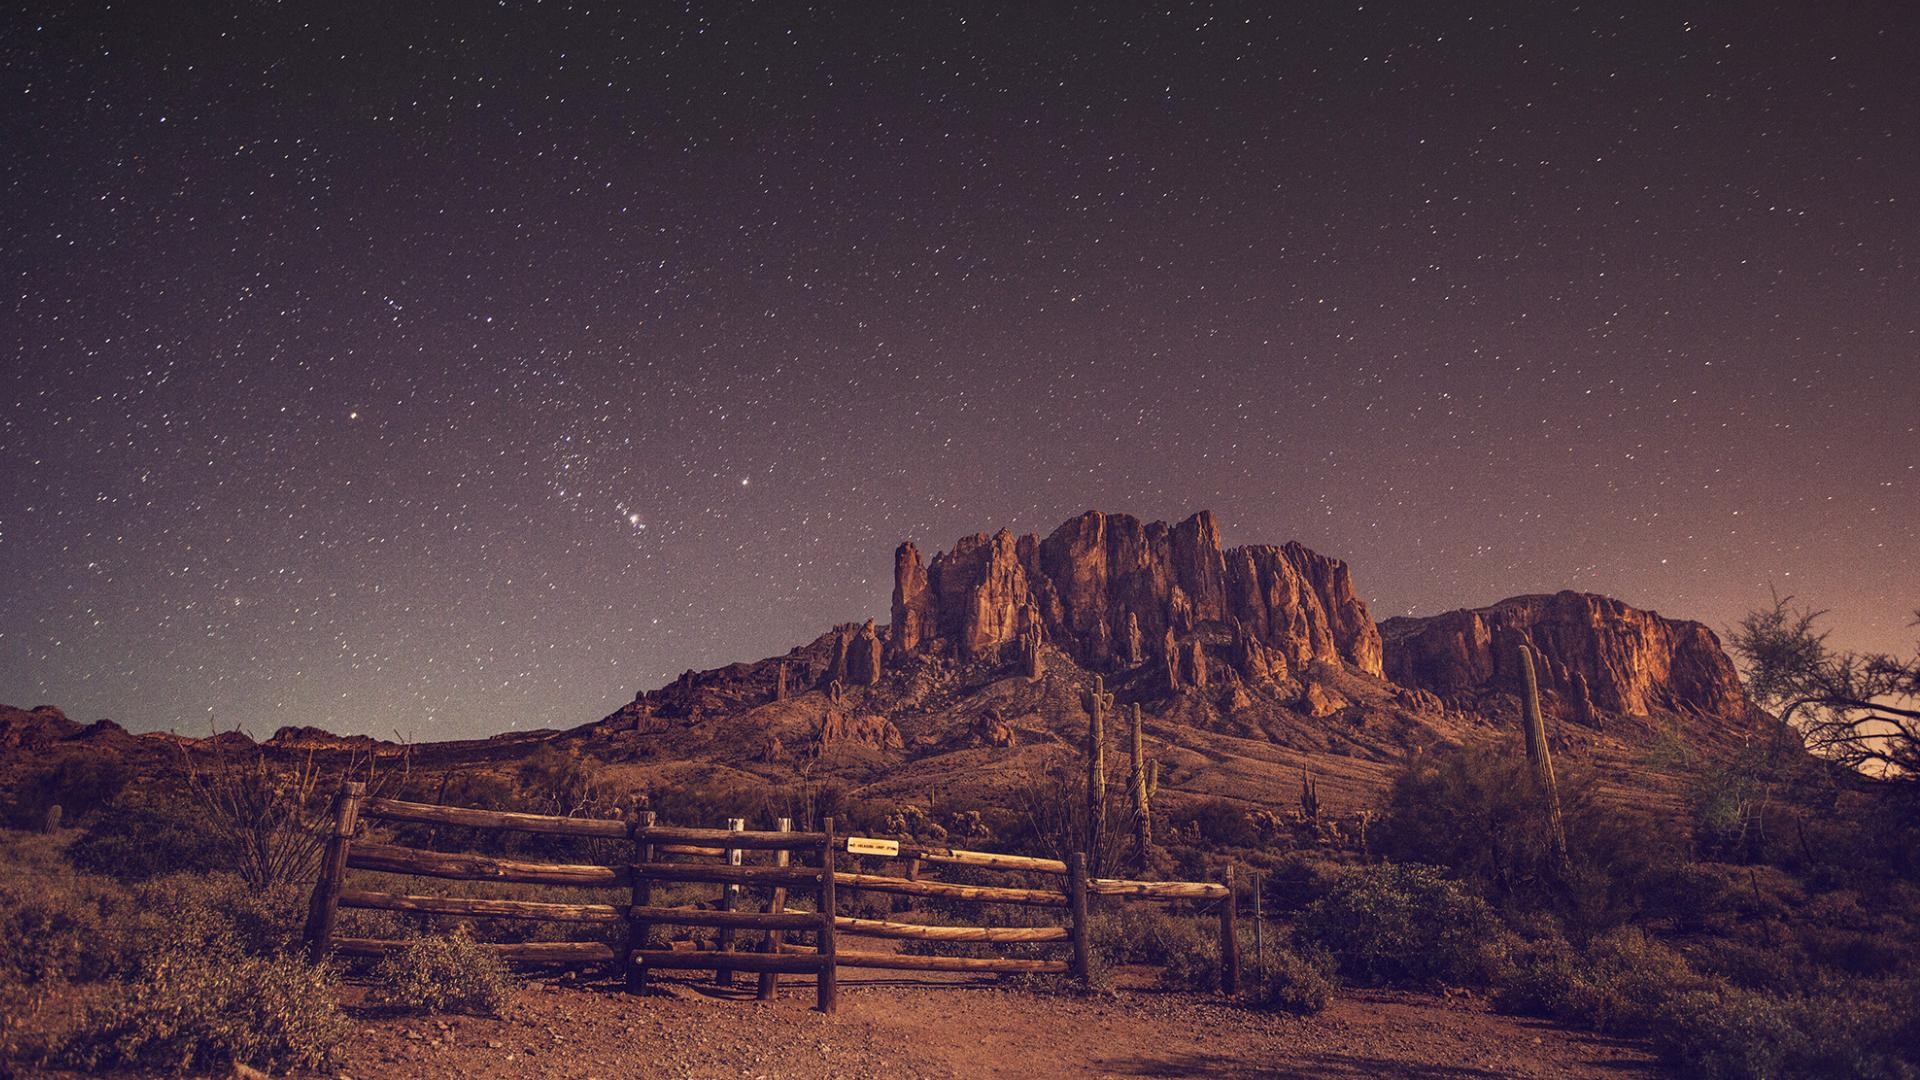 General 1920x1080 desert night stars landscape sky nature rocks outdoors